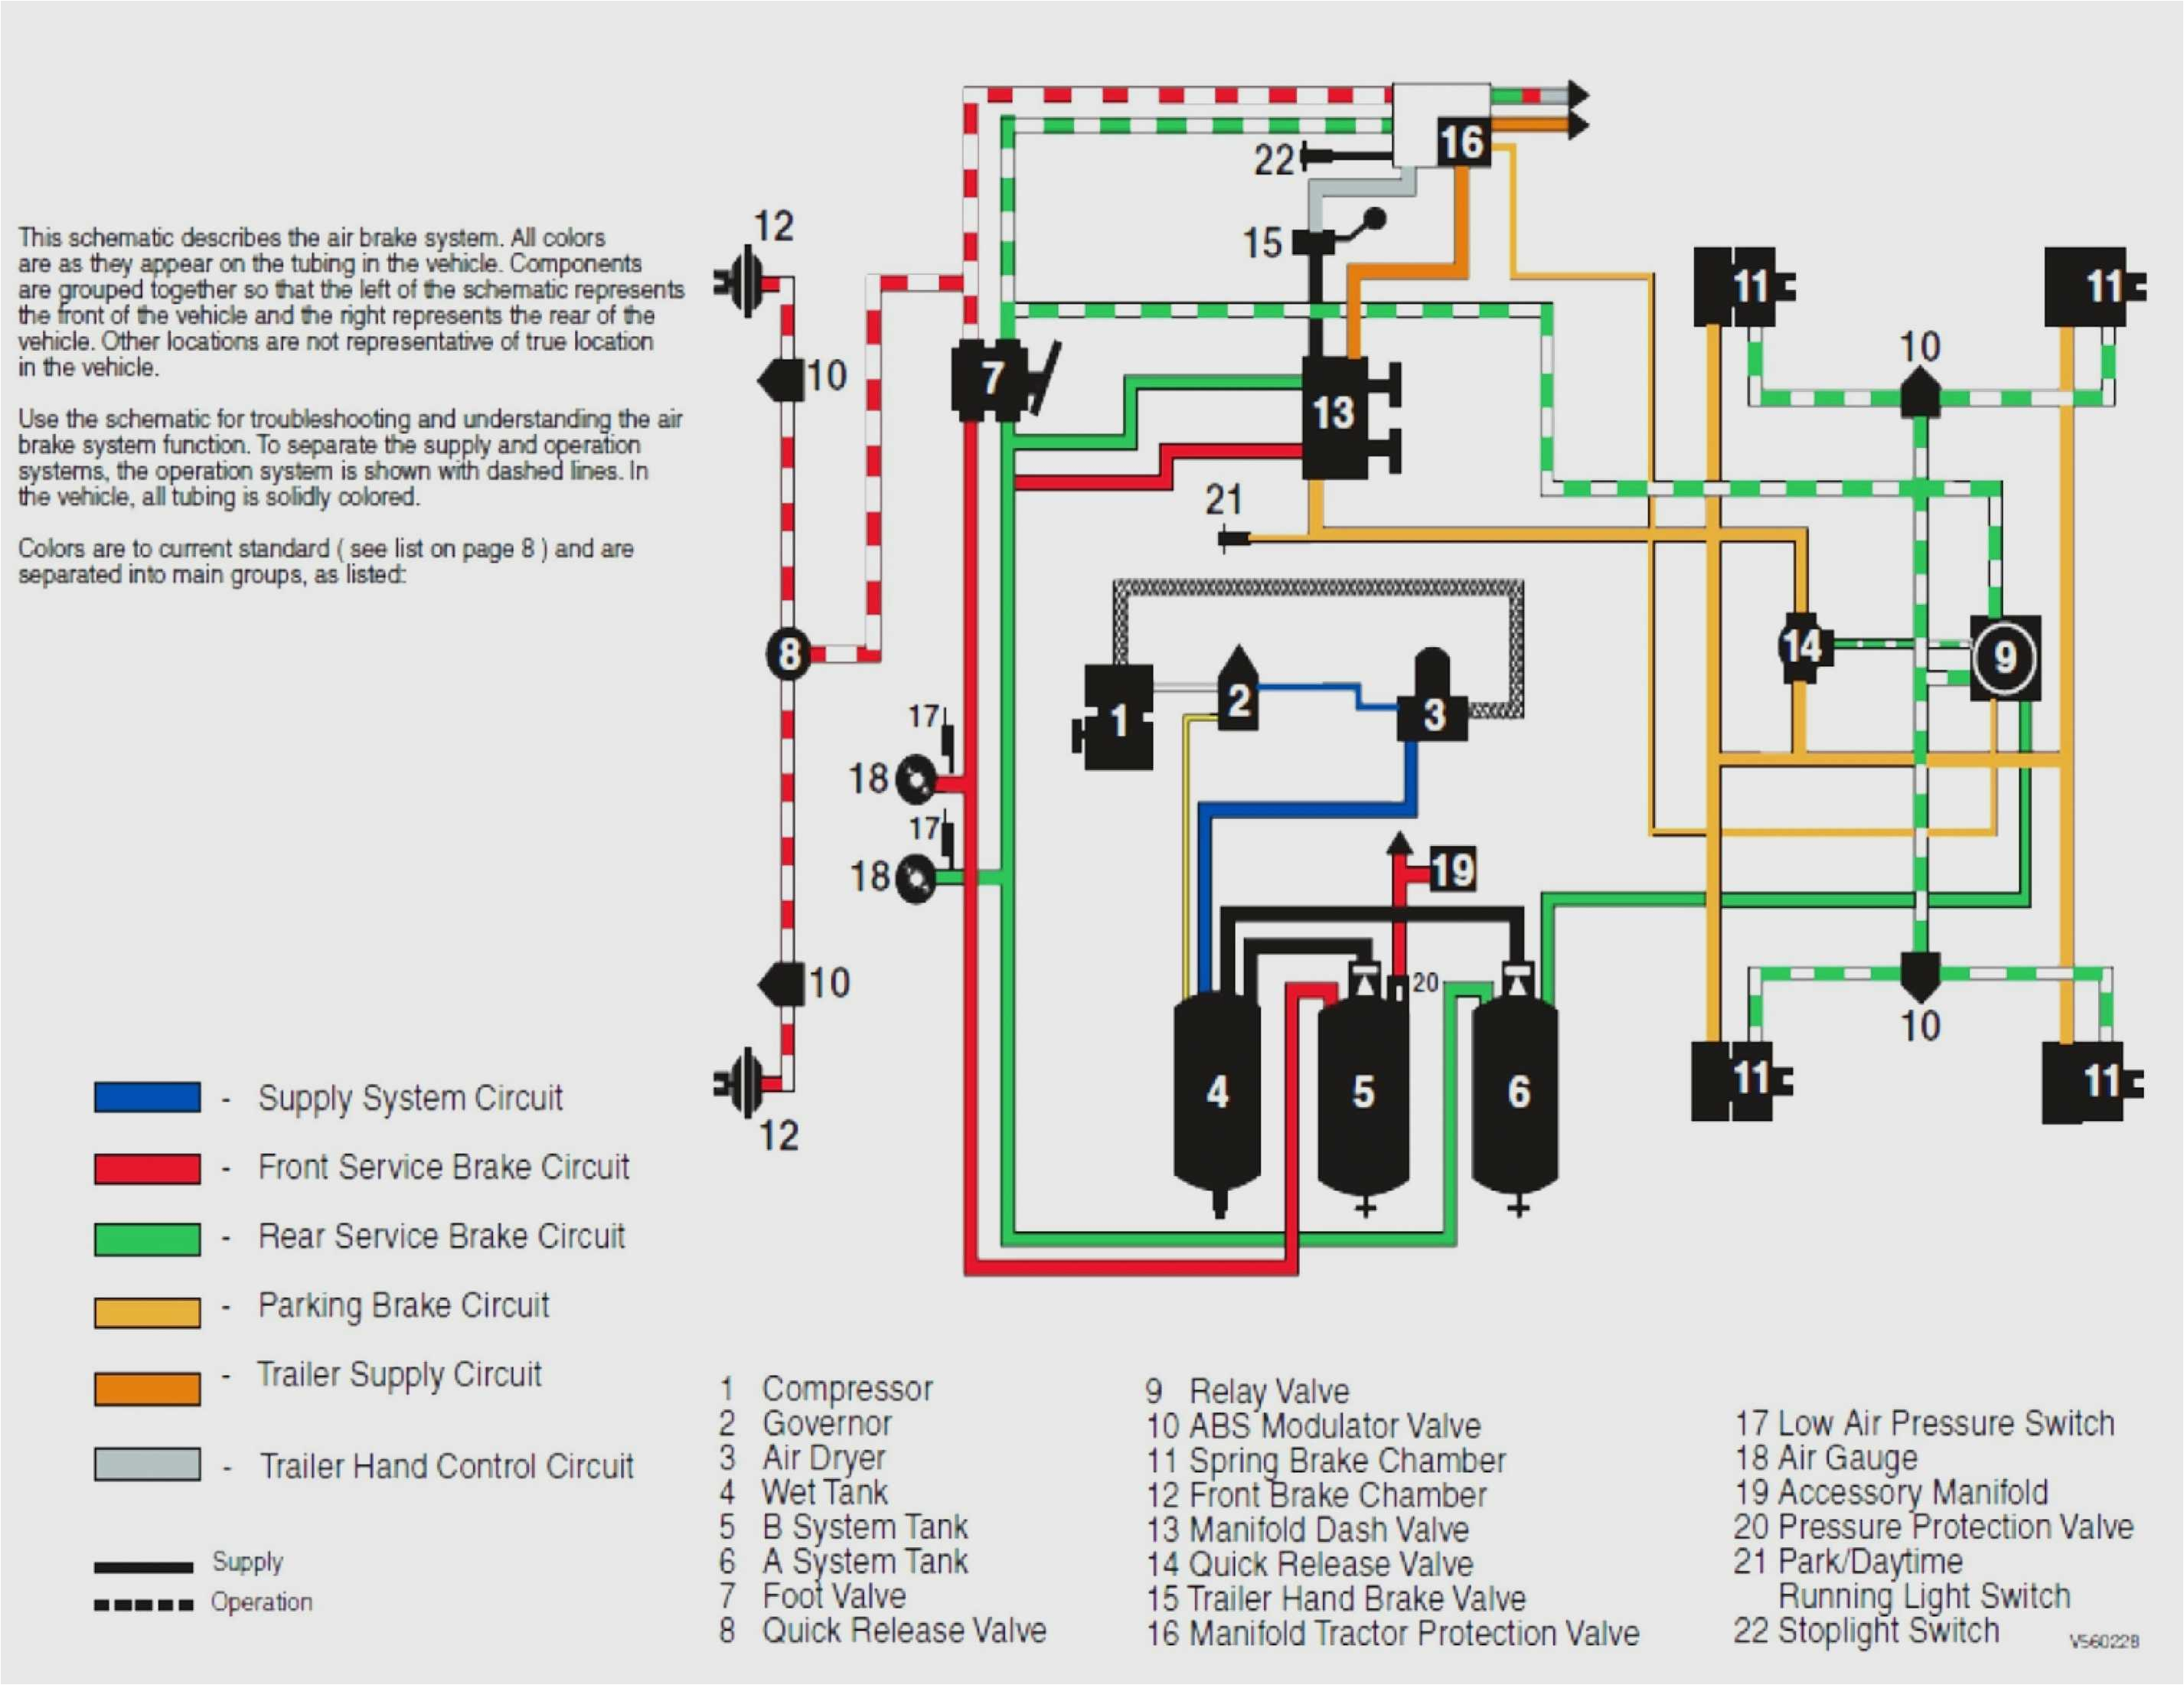 h amp h trailer wiring diagram utility color code new wiring diagrams for utility trailer refrence